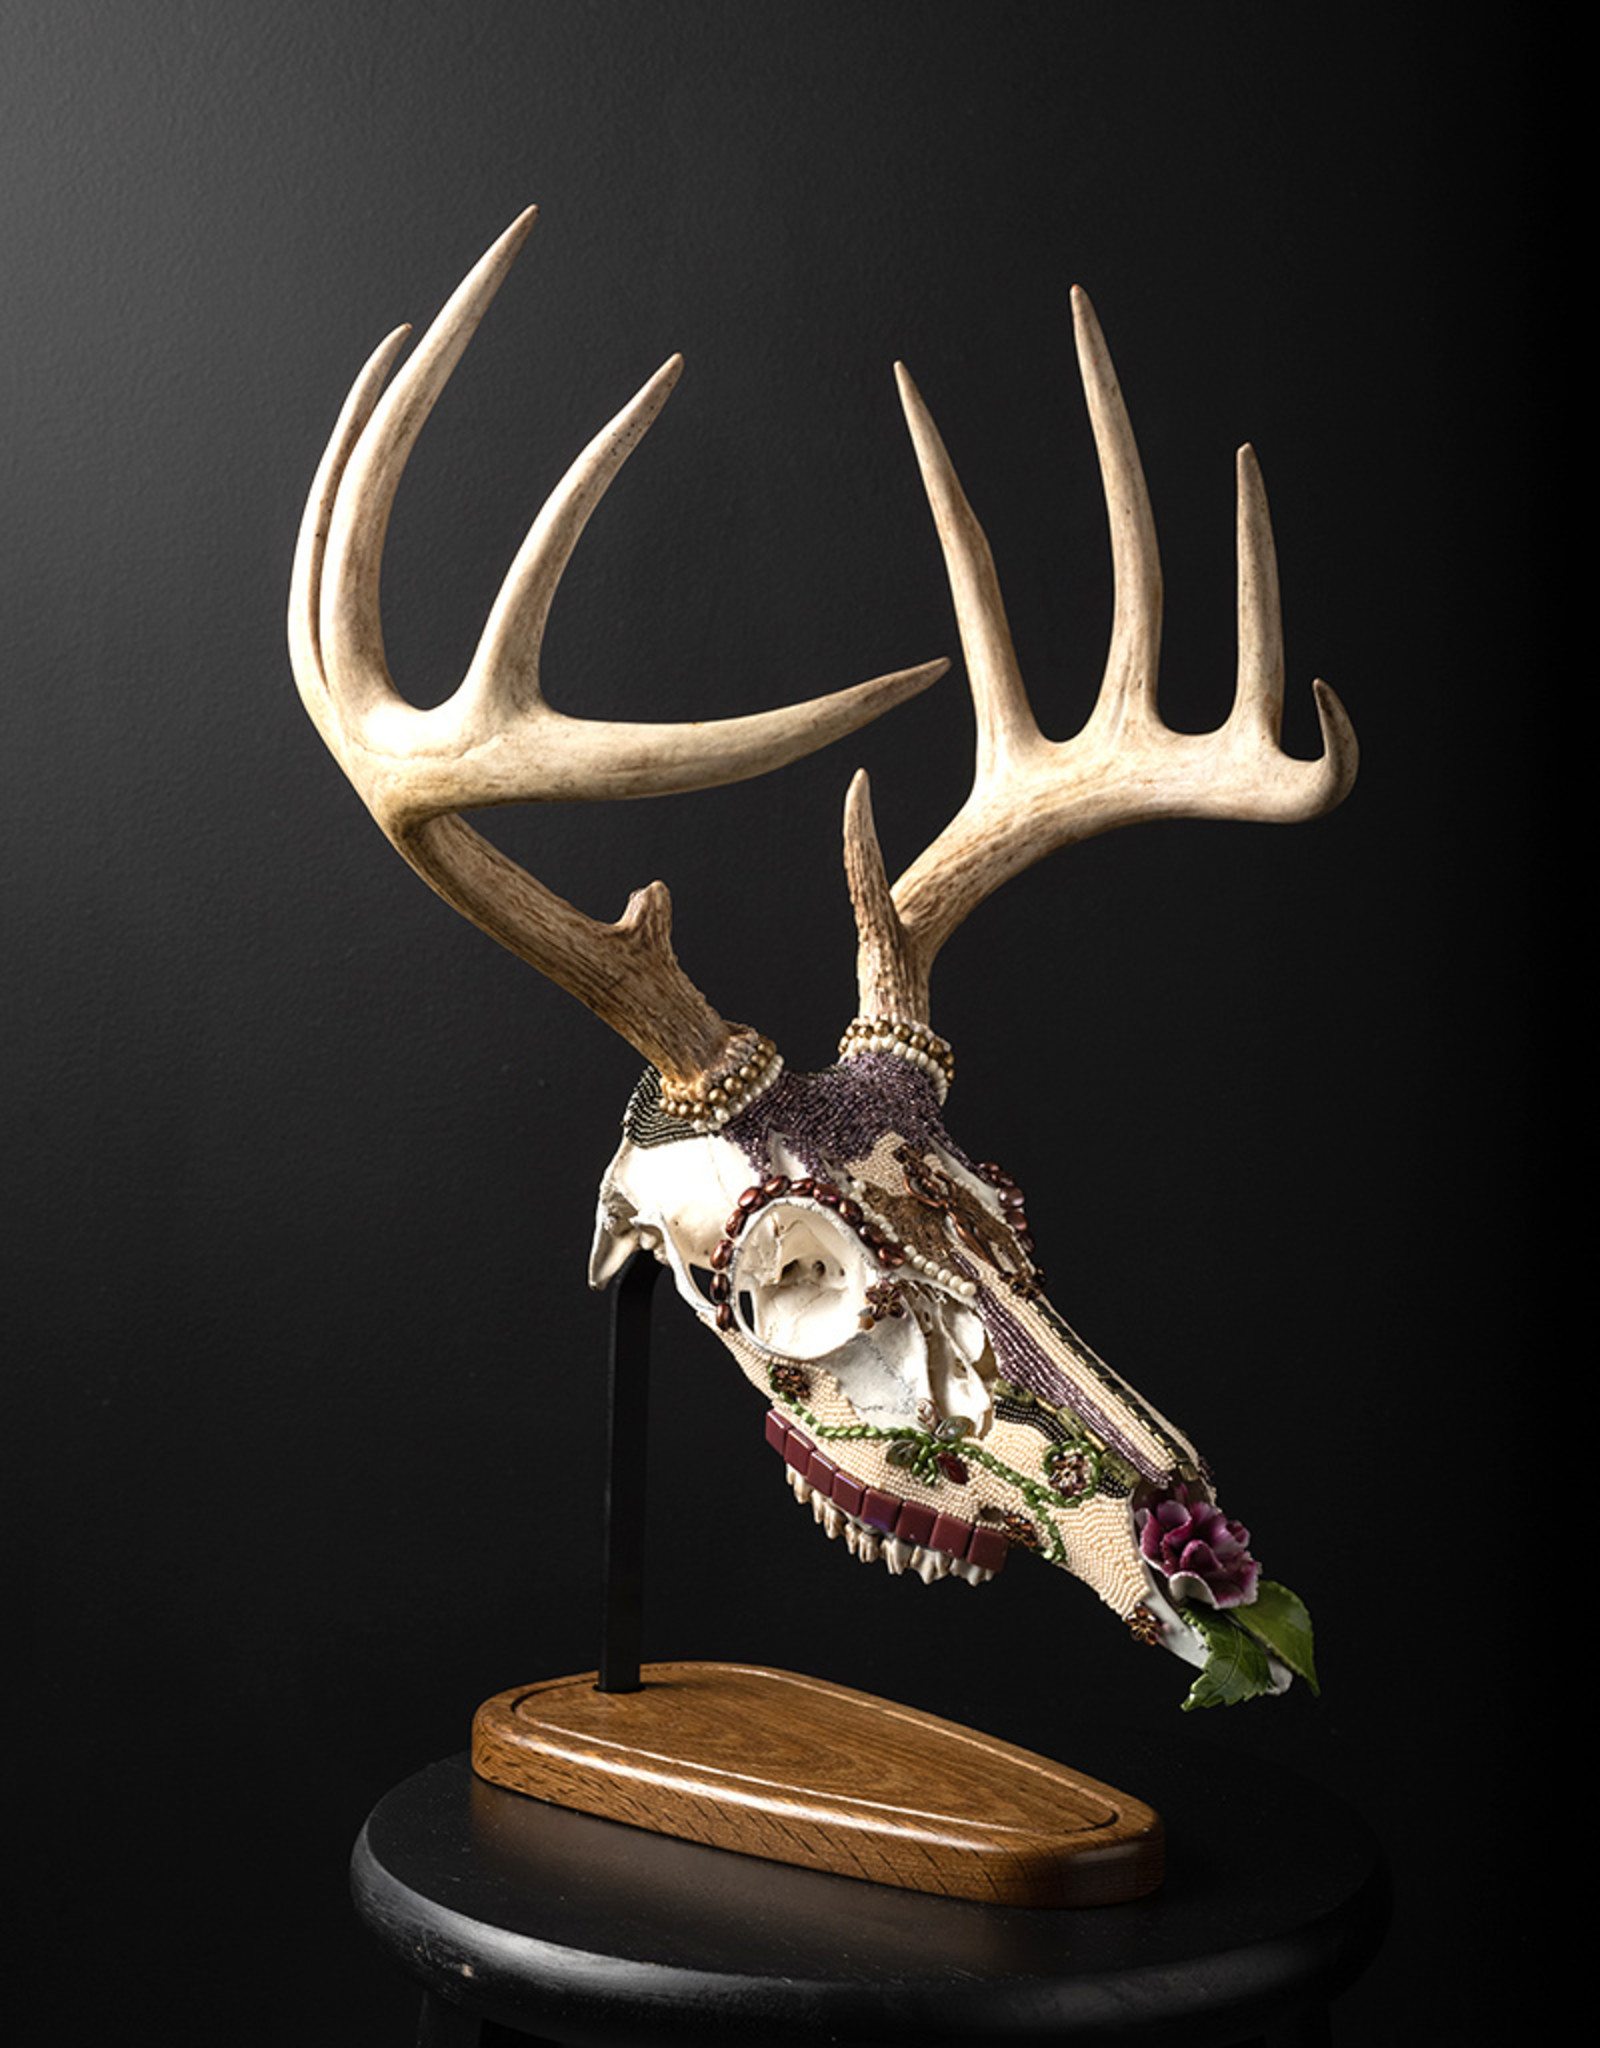 Kelly Nygard Juliette - Decorated Deer Skull - Kelly Nygard